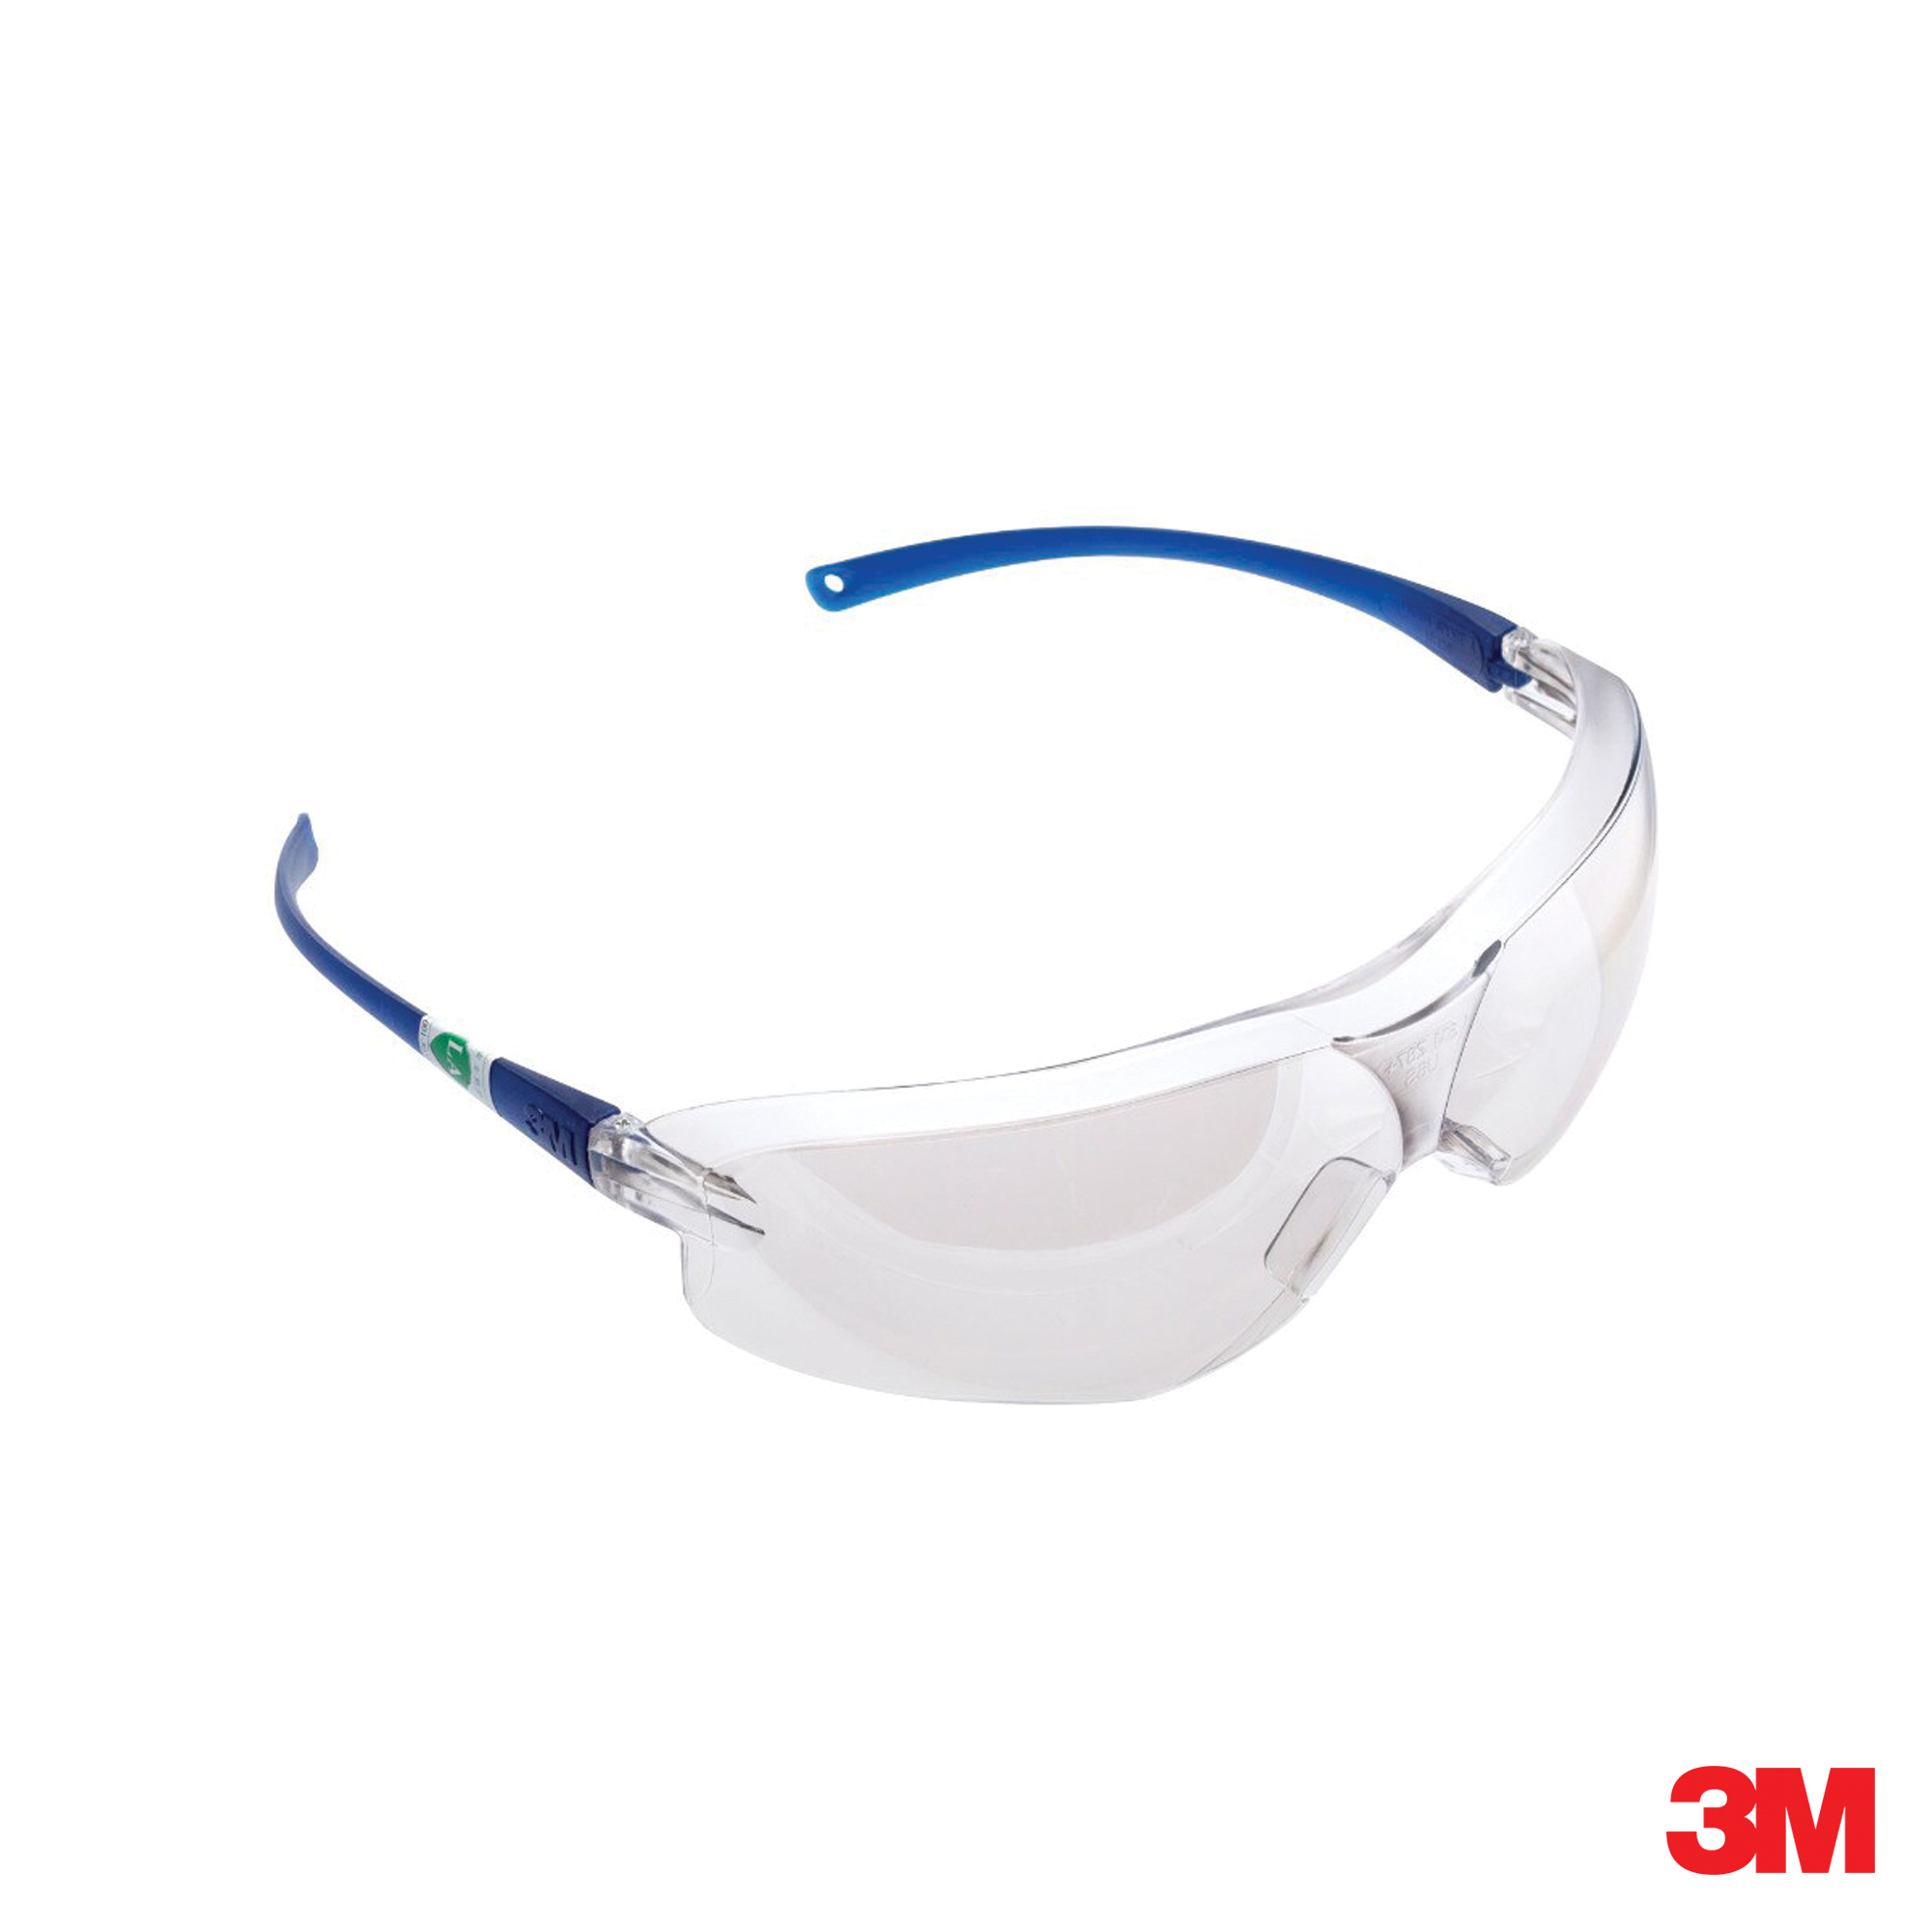 3M Protective Eyewear แว่นตานิรภัย รุ่น V36 Virtua Sports Asian Fit ขาแว่นสีฟ้า เลนส์สีชา [XI003855248]